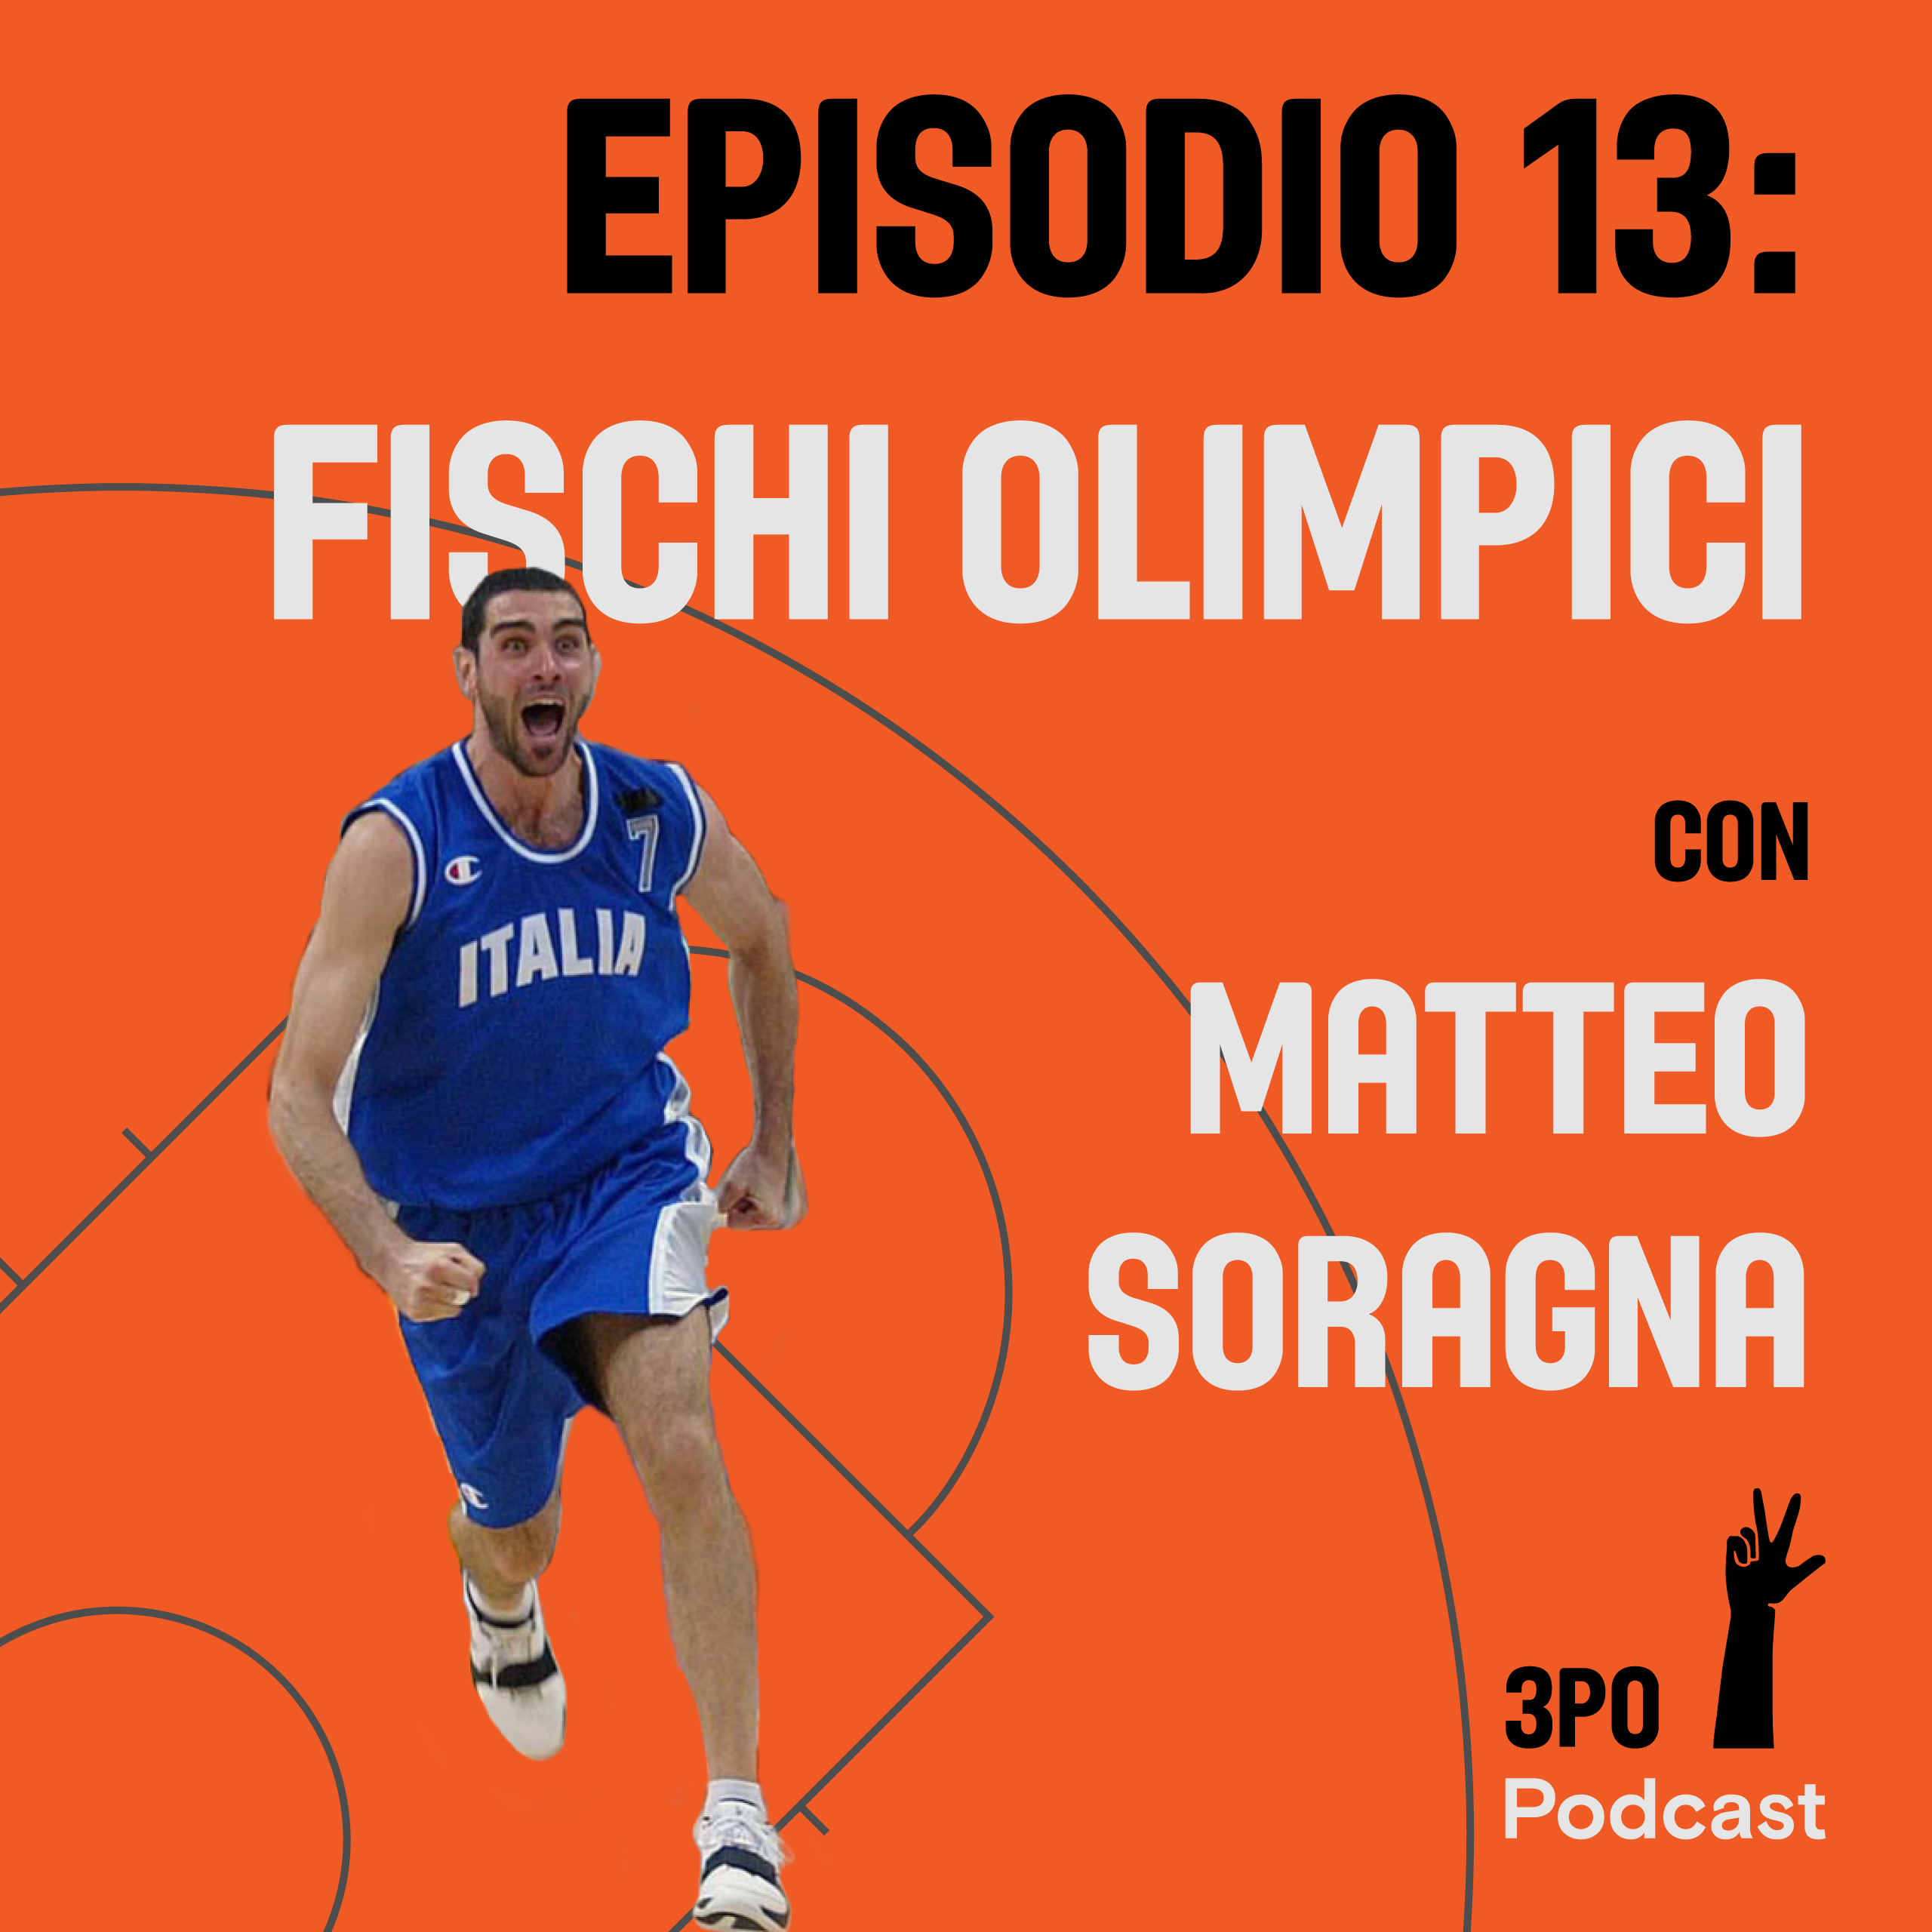 Episodio 13: Fischi Olimpici con Matteo Soragna